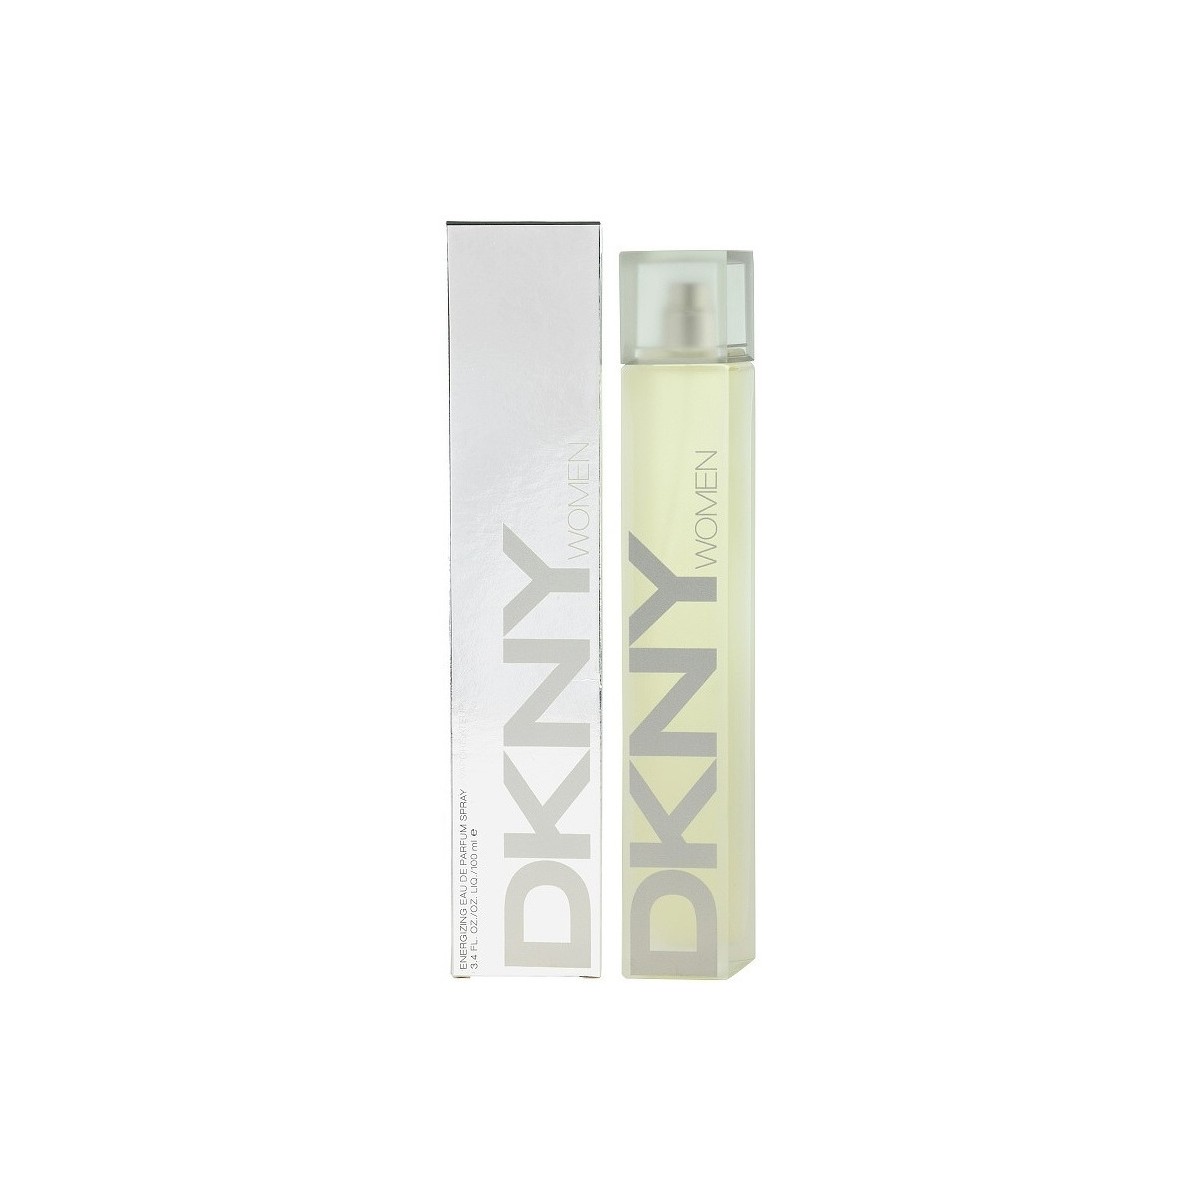 Belleza Mujer Perfume Dkny Energizing - Eau de Parfum - 100ml - Vaporizador Energizing - perfume - 100ml - spray